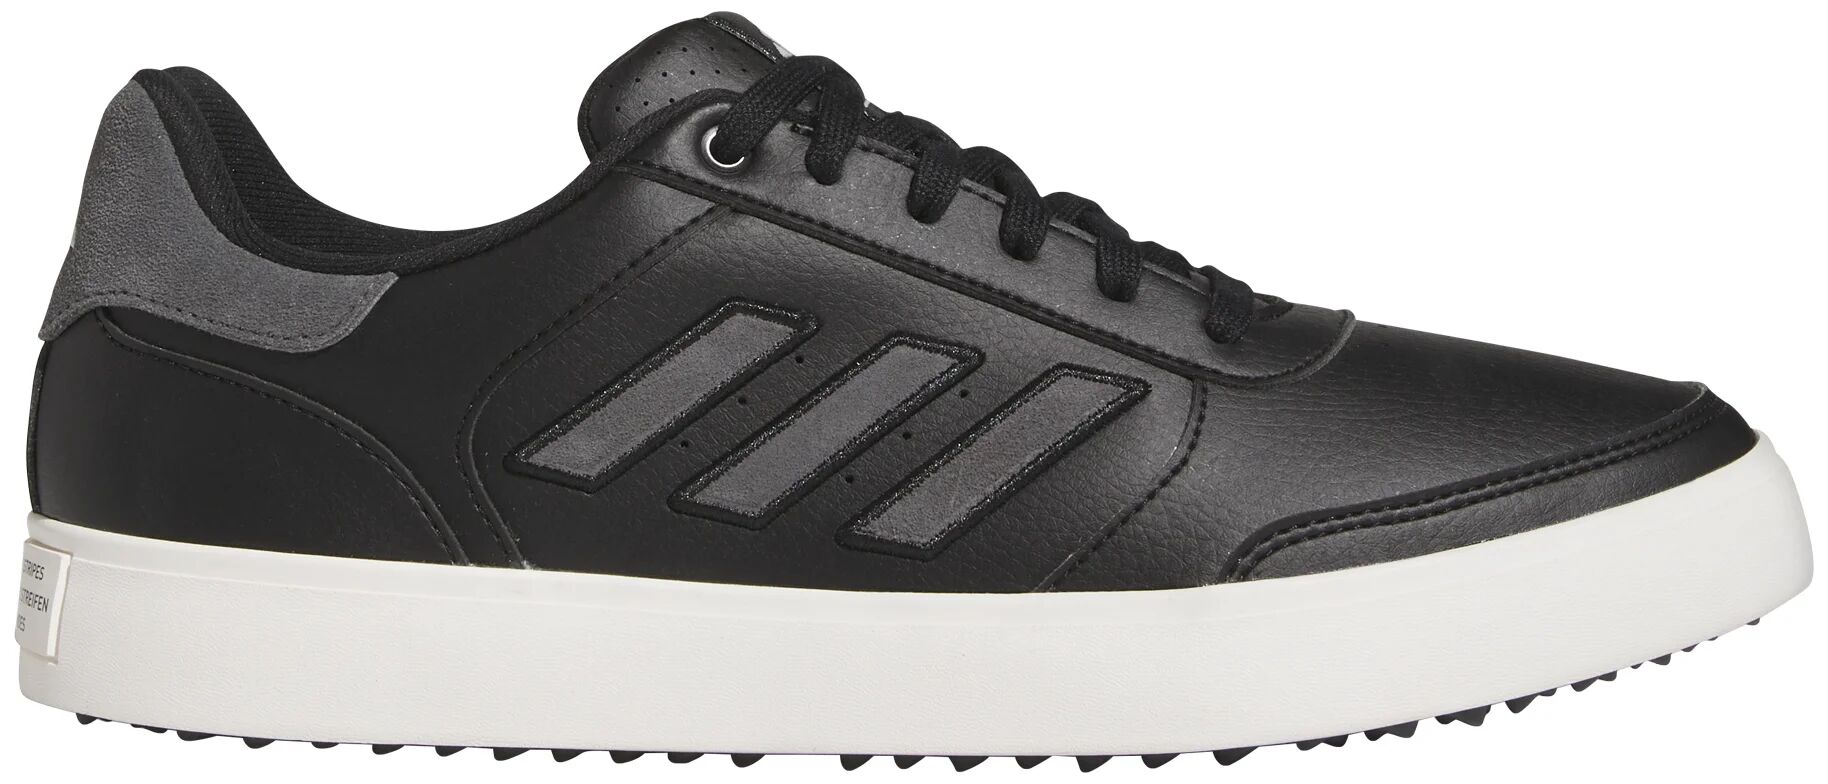 adidas Retrocross Spikeless 24 Golf Shoes - Core Black/Grey Five/Off White - 9.5 - MEDIUM